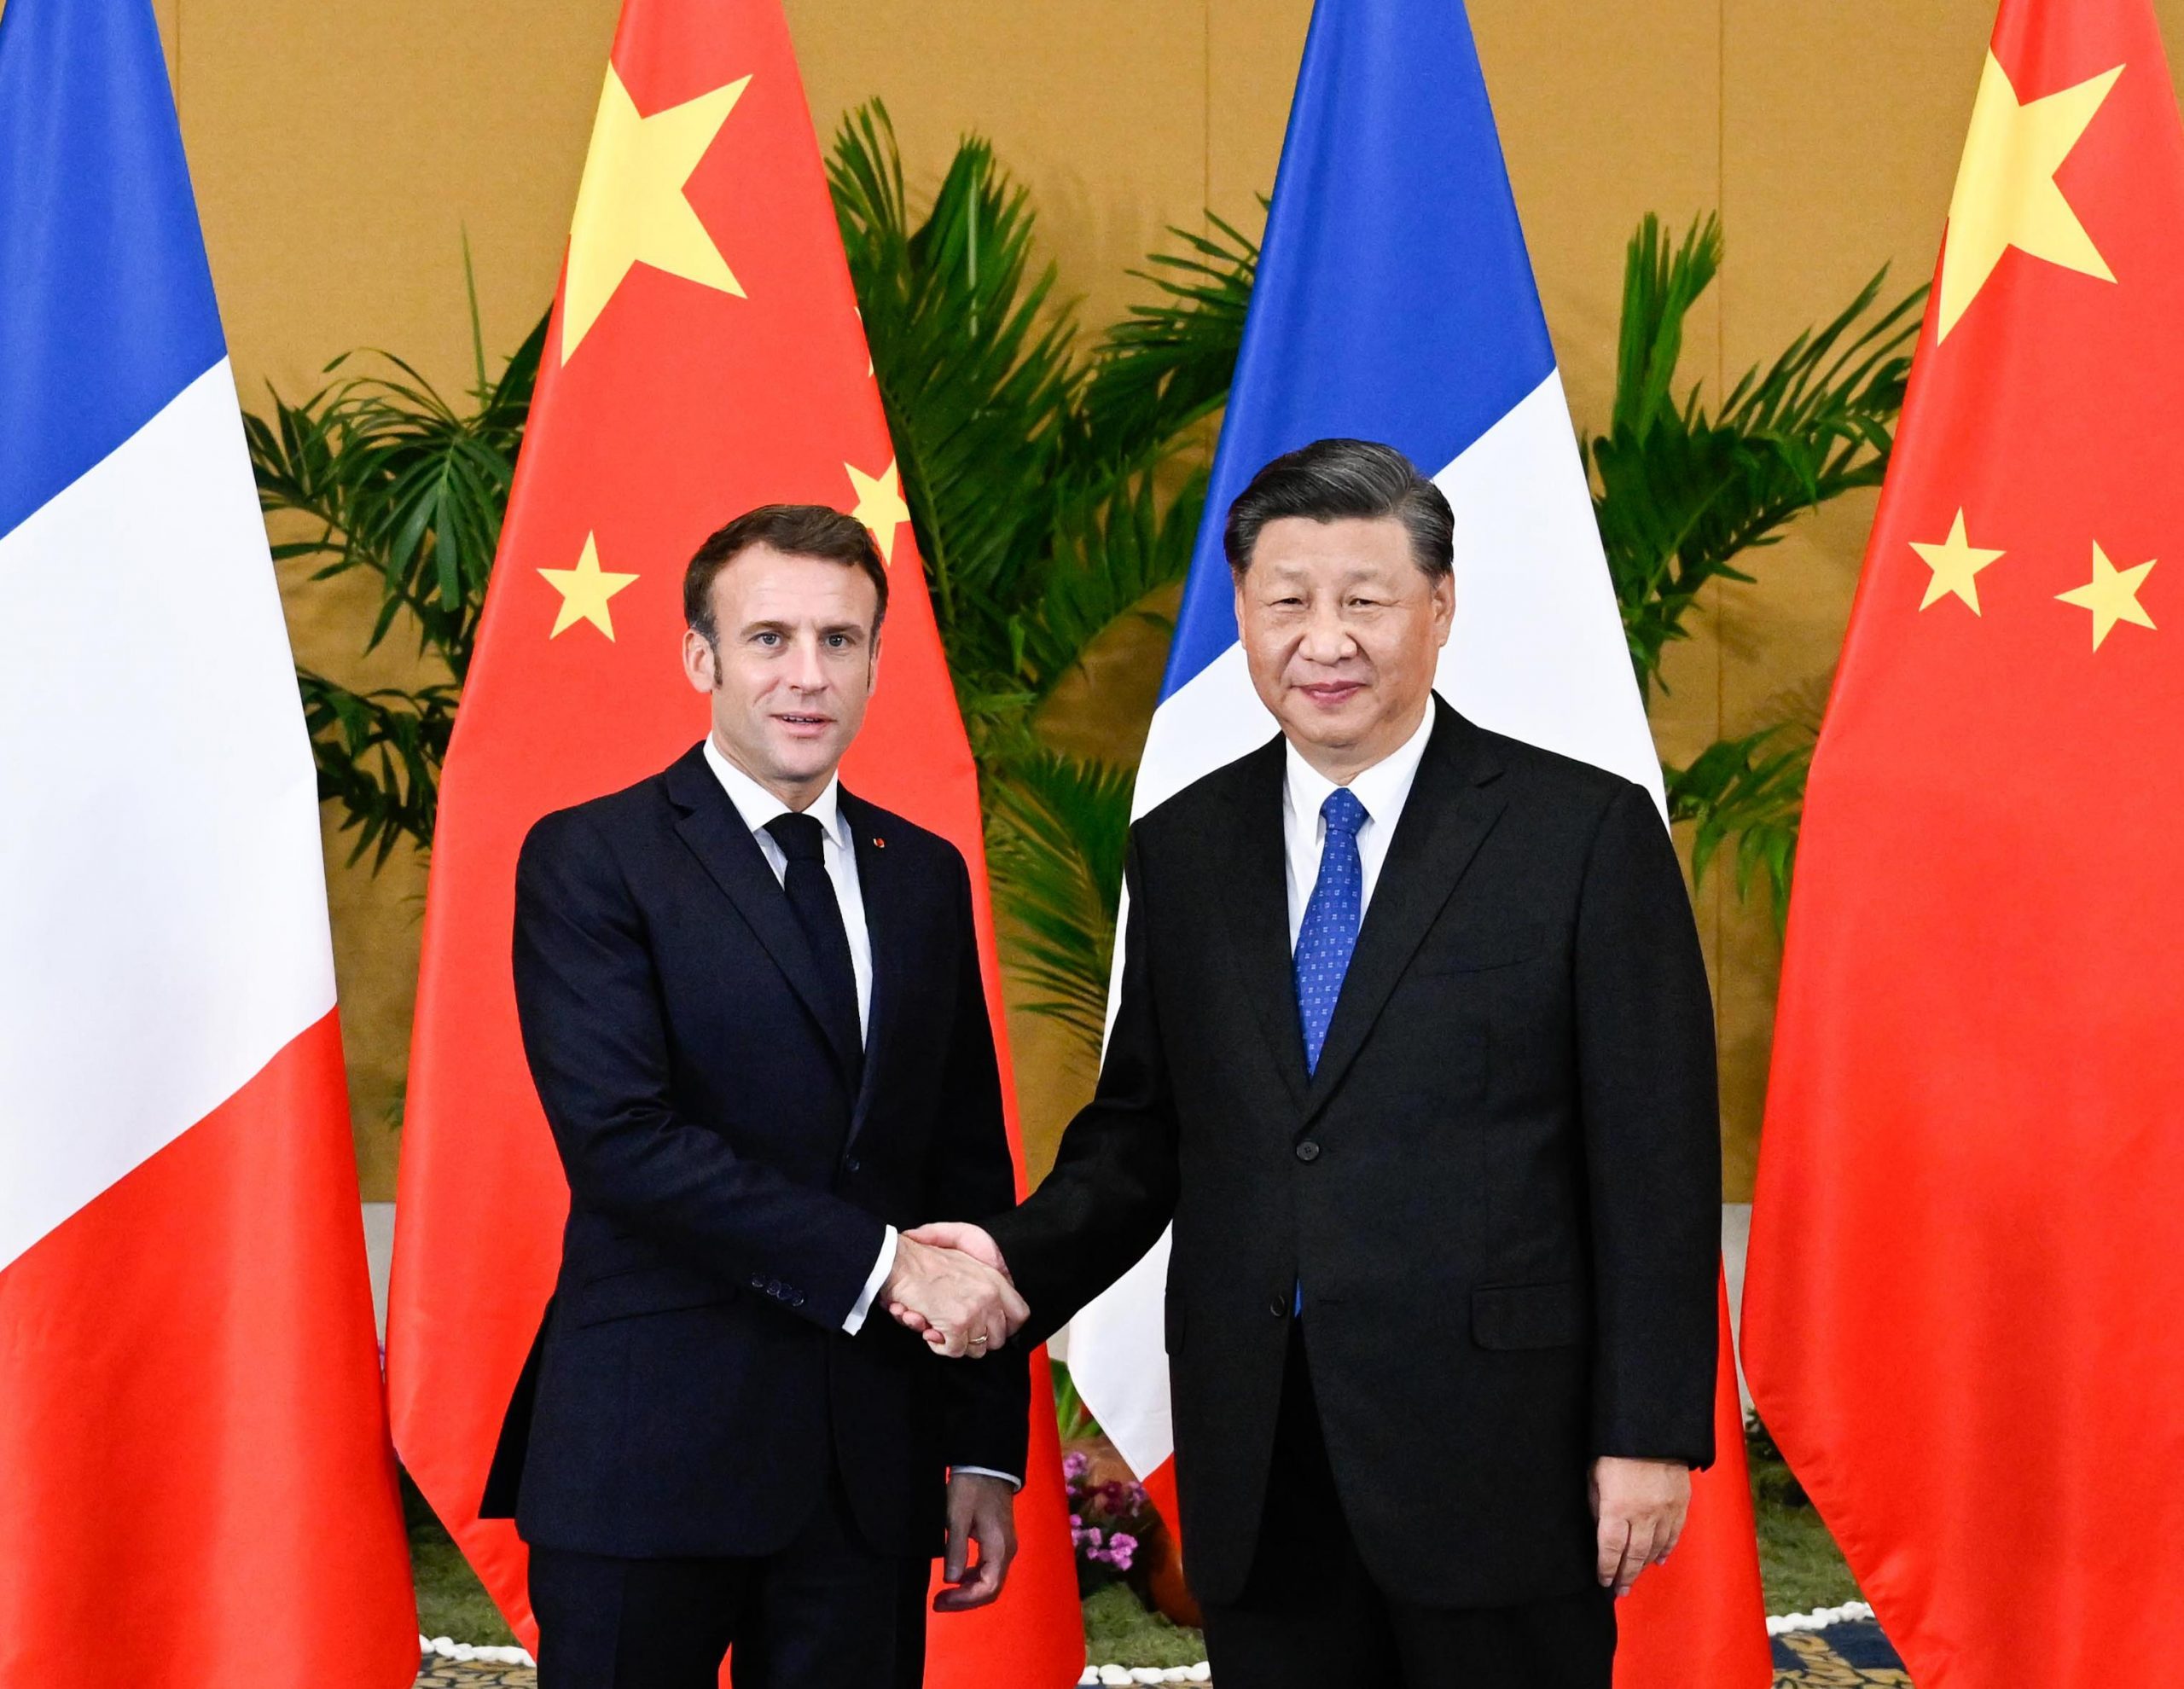 Xi incontra il presidente francese Macron